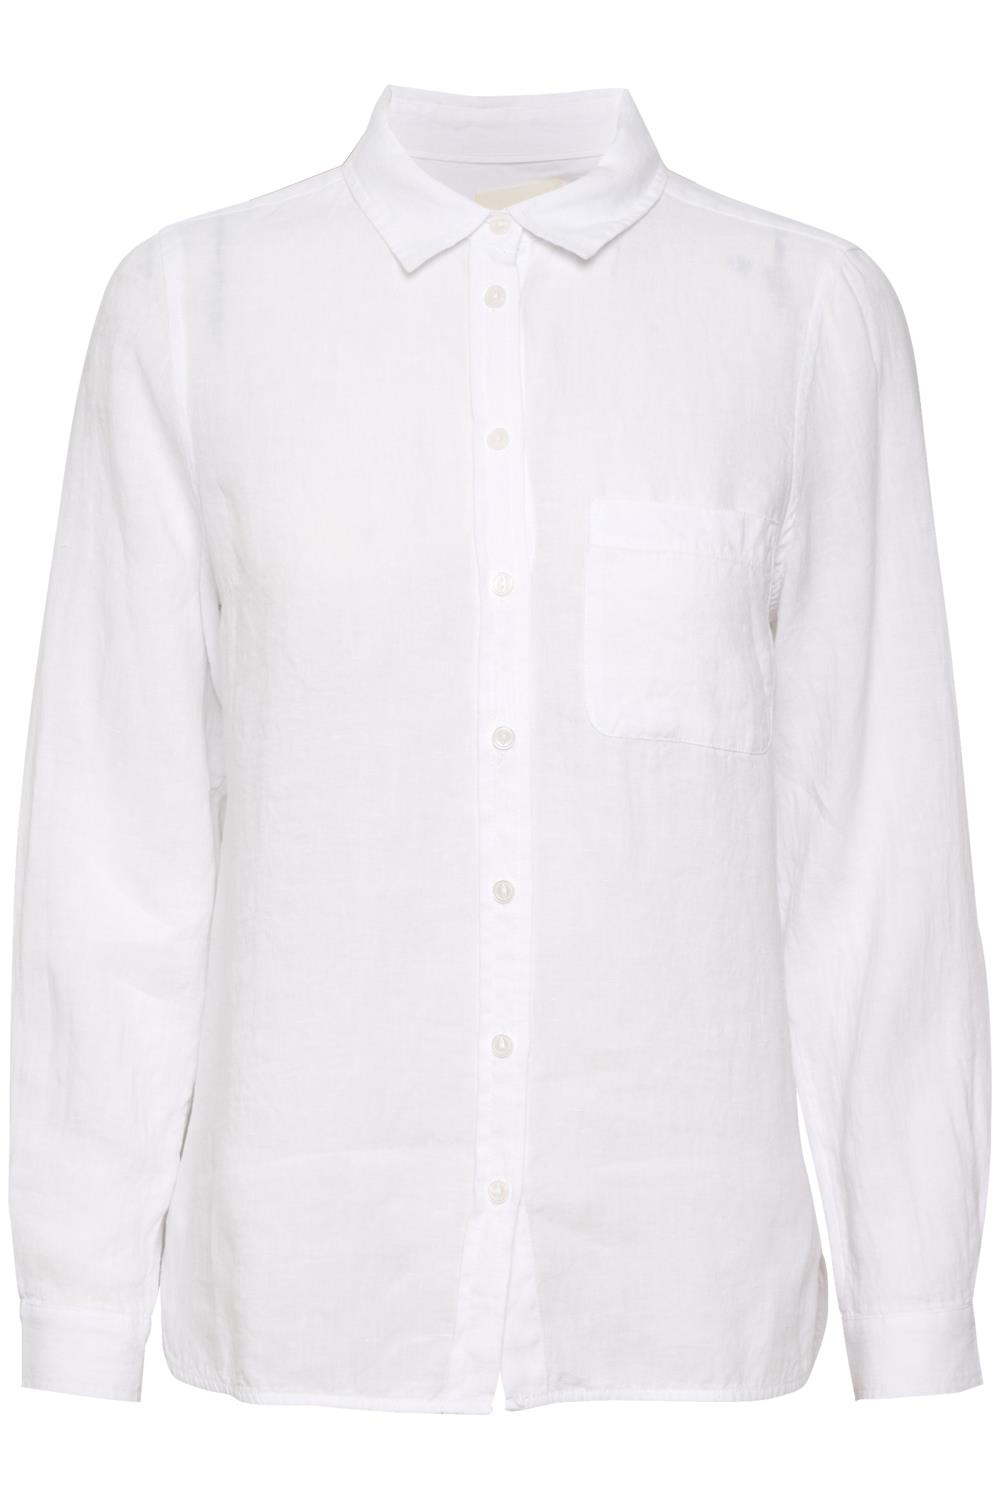 Part Two Kivas, hvit lin skjorte